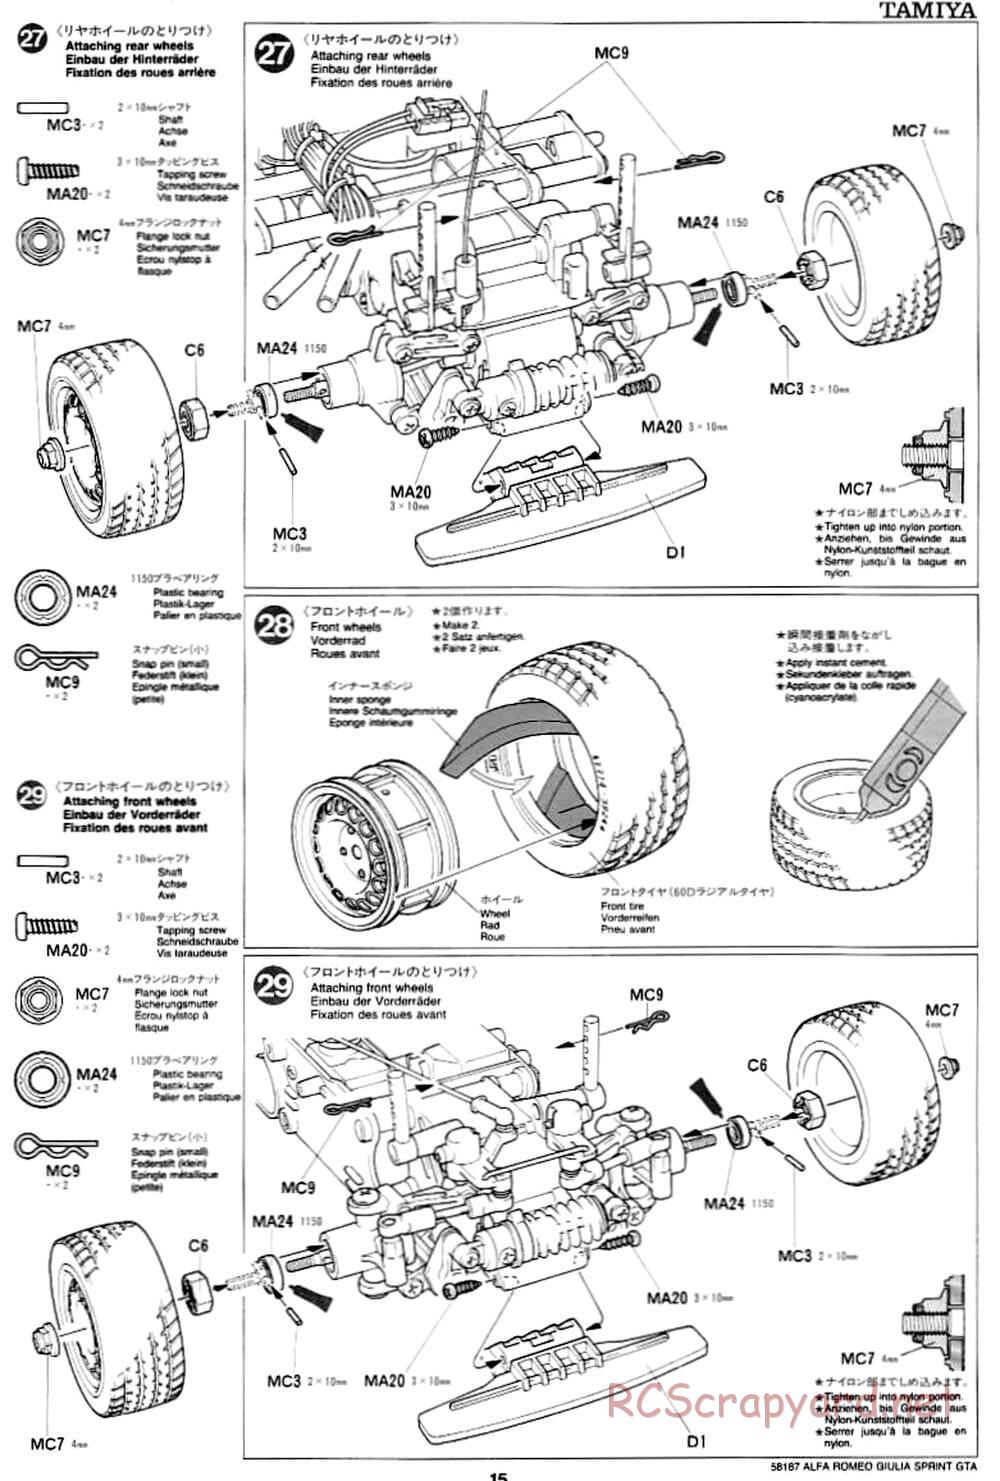 Tamiya - Alfa Romeo Giulia Sprint GTA - M02M Chassis - Manual - Page 15